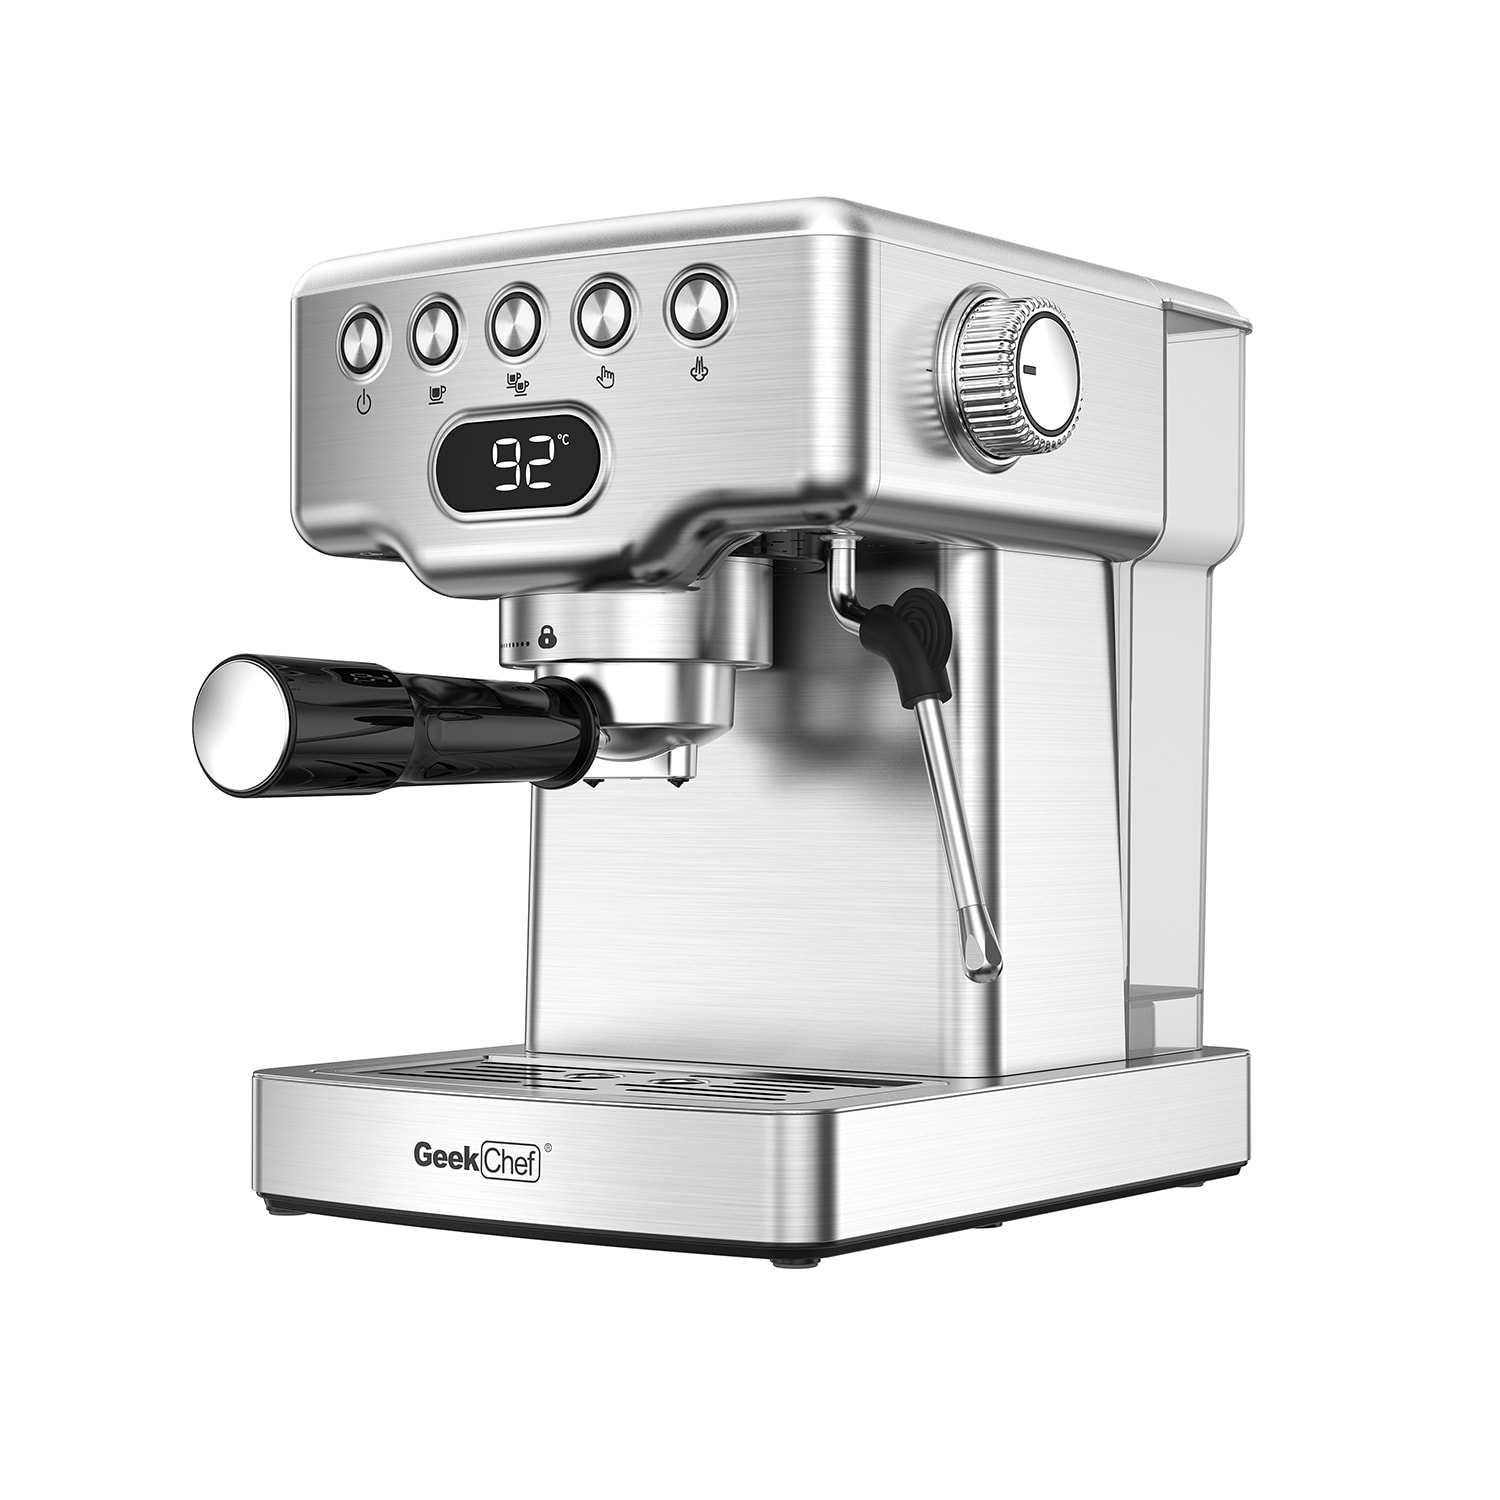 Cafetera espresso Kitchenaid Espresso Collection KES6403BM